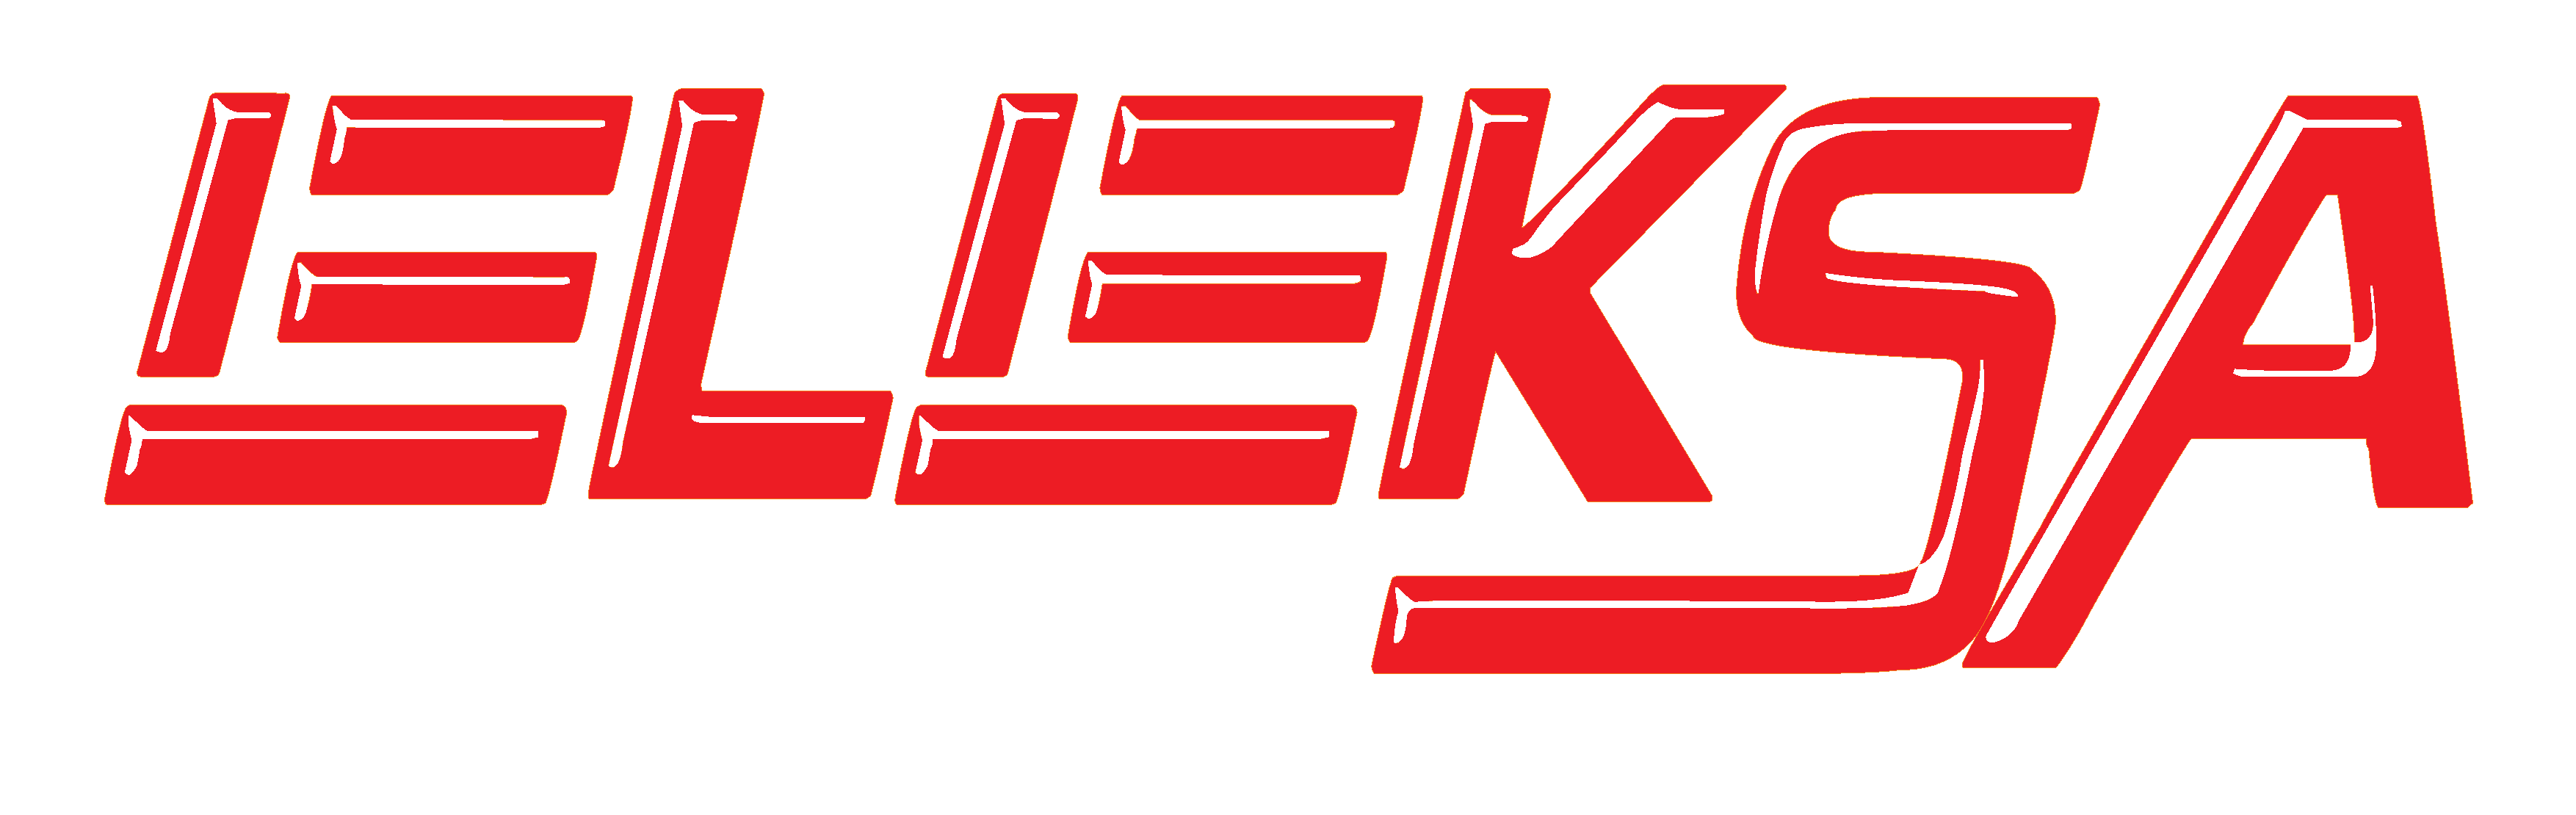 Eleksa logo white slogan